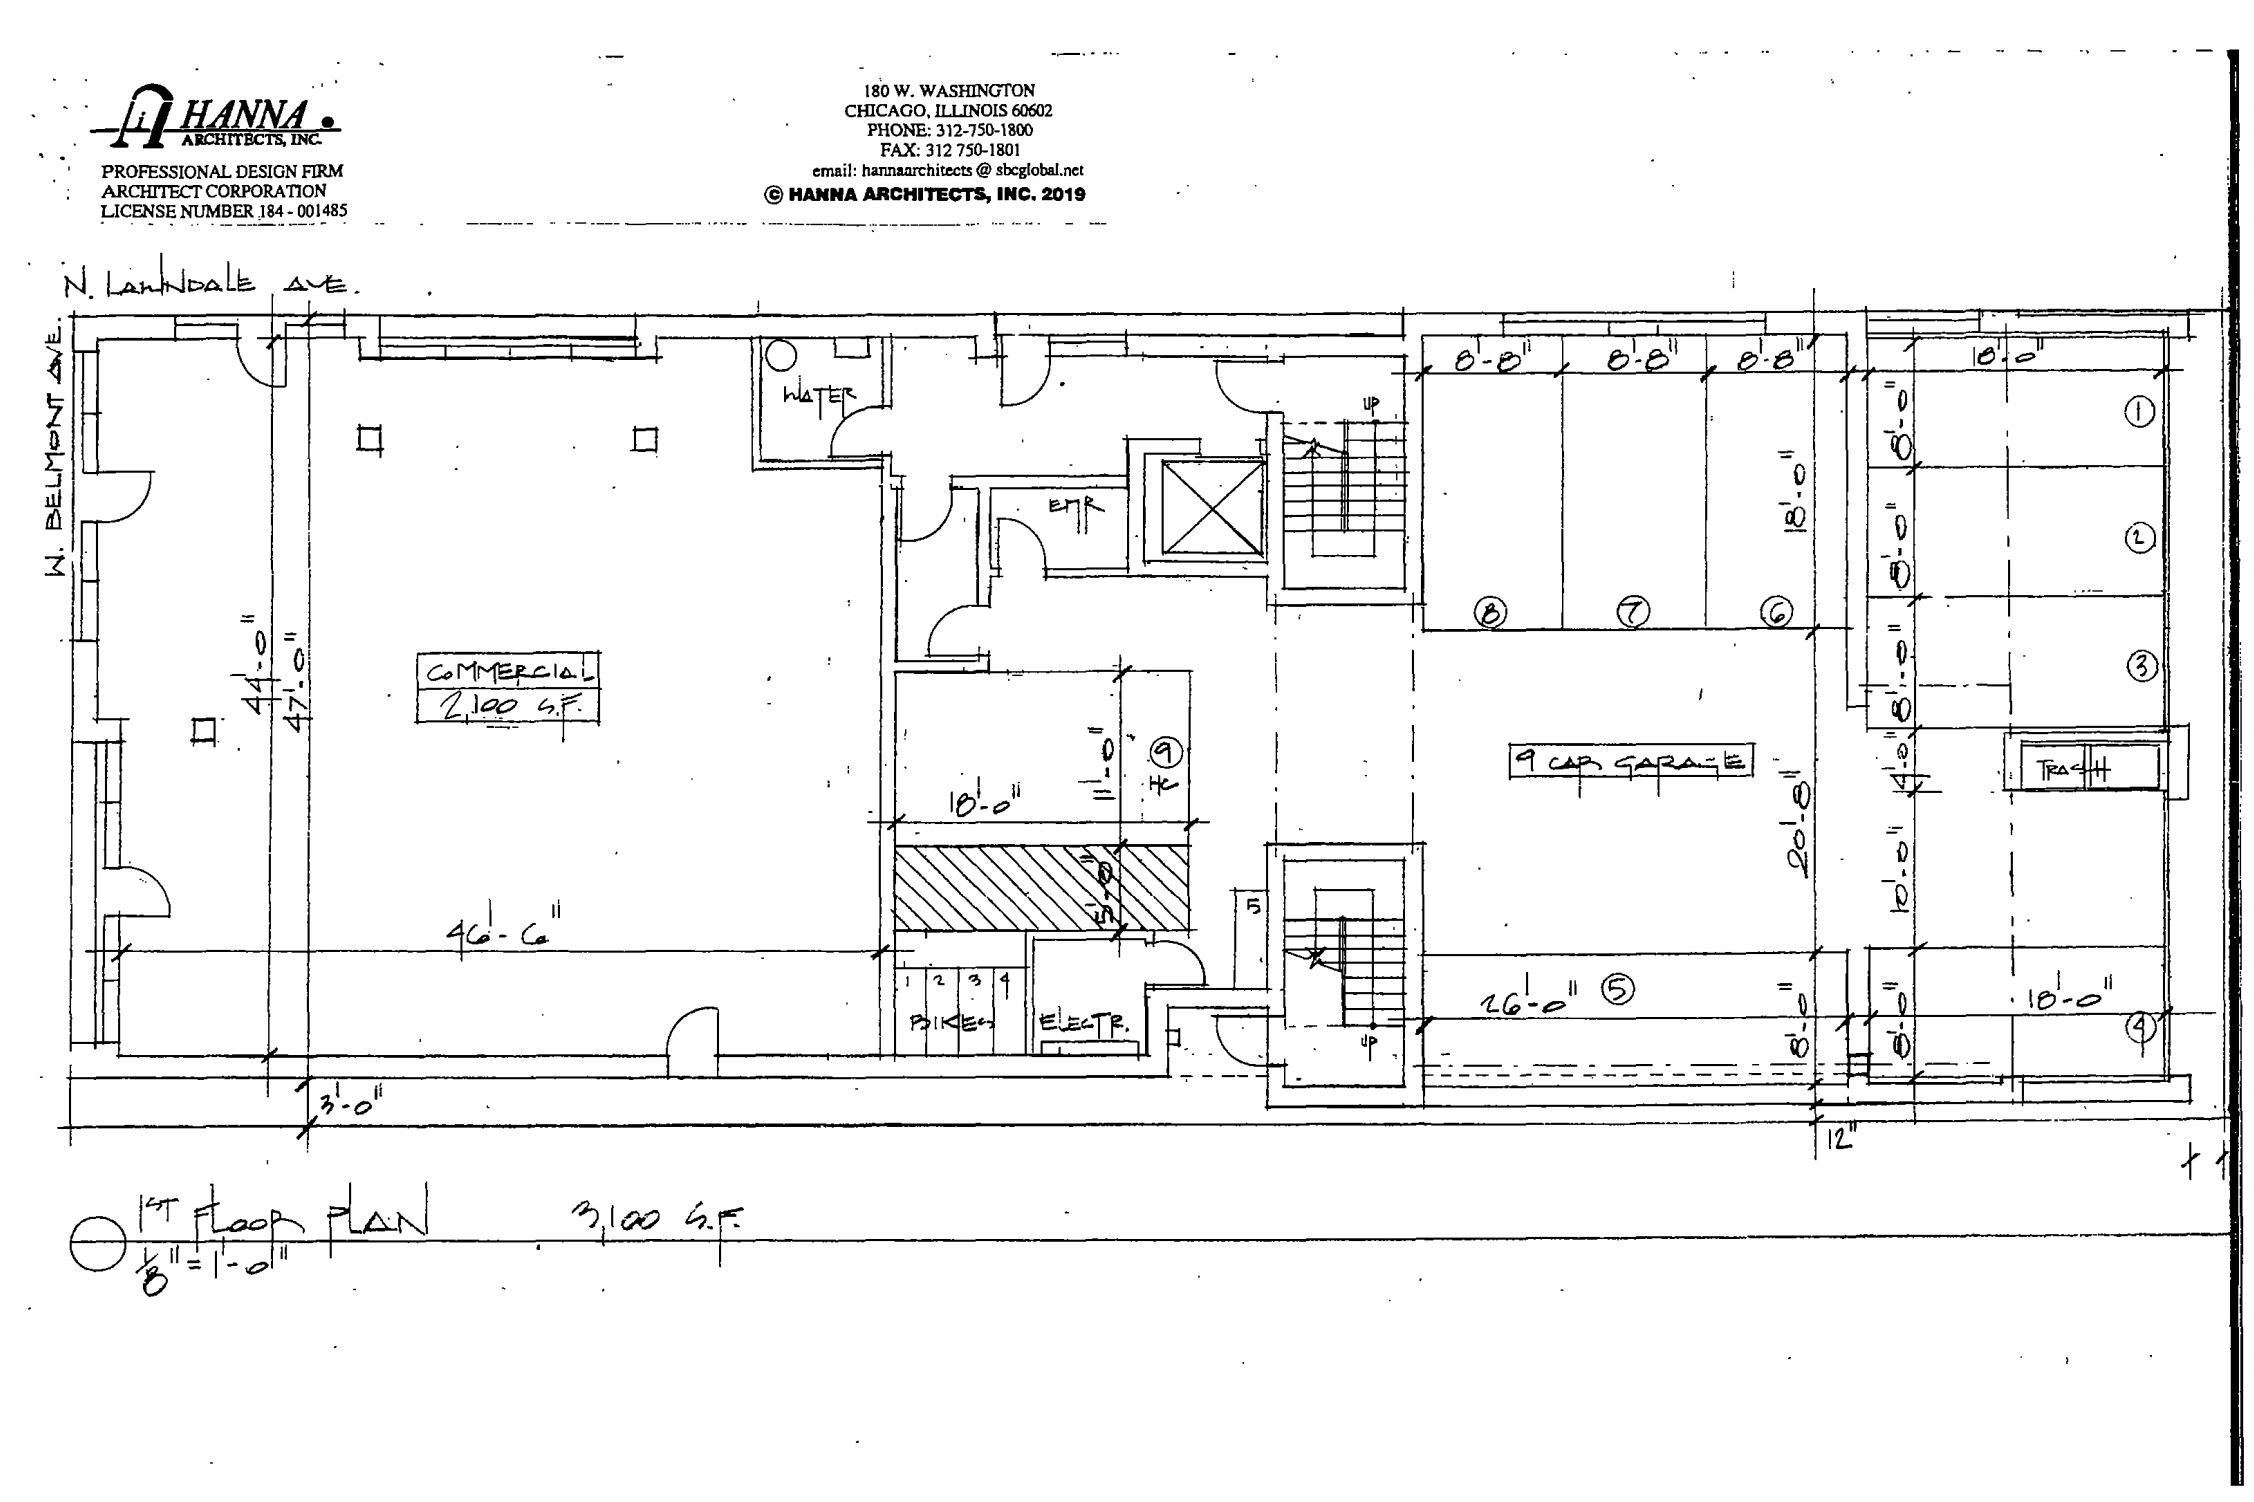 3654-56 W Belmont Avenue first floor plan